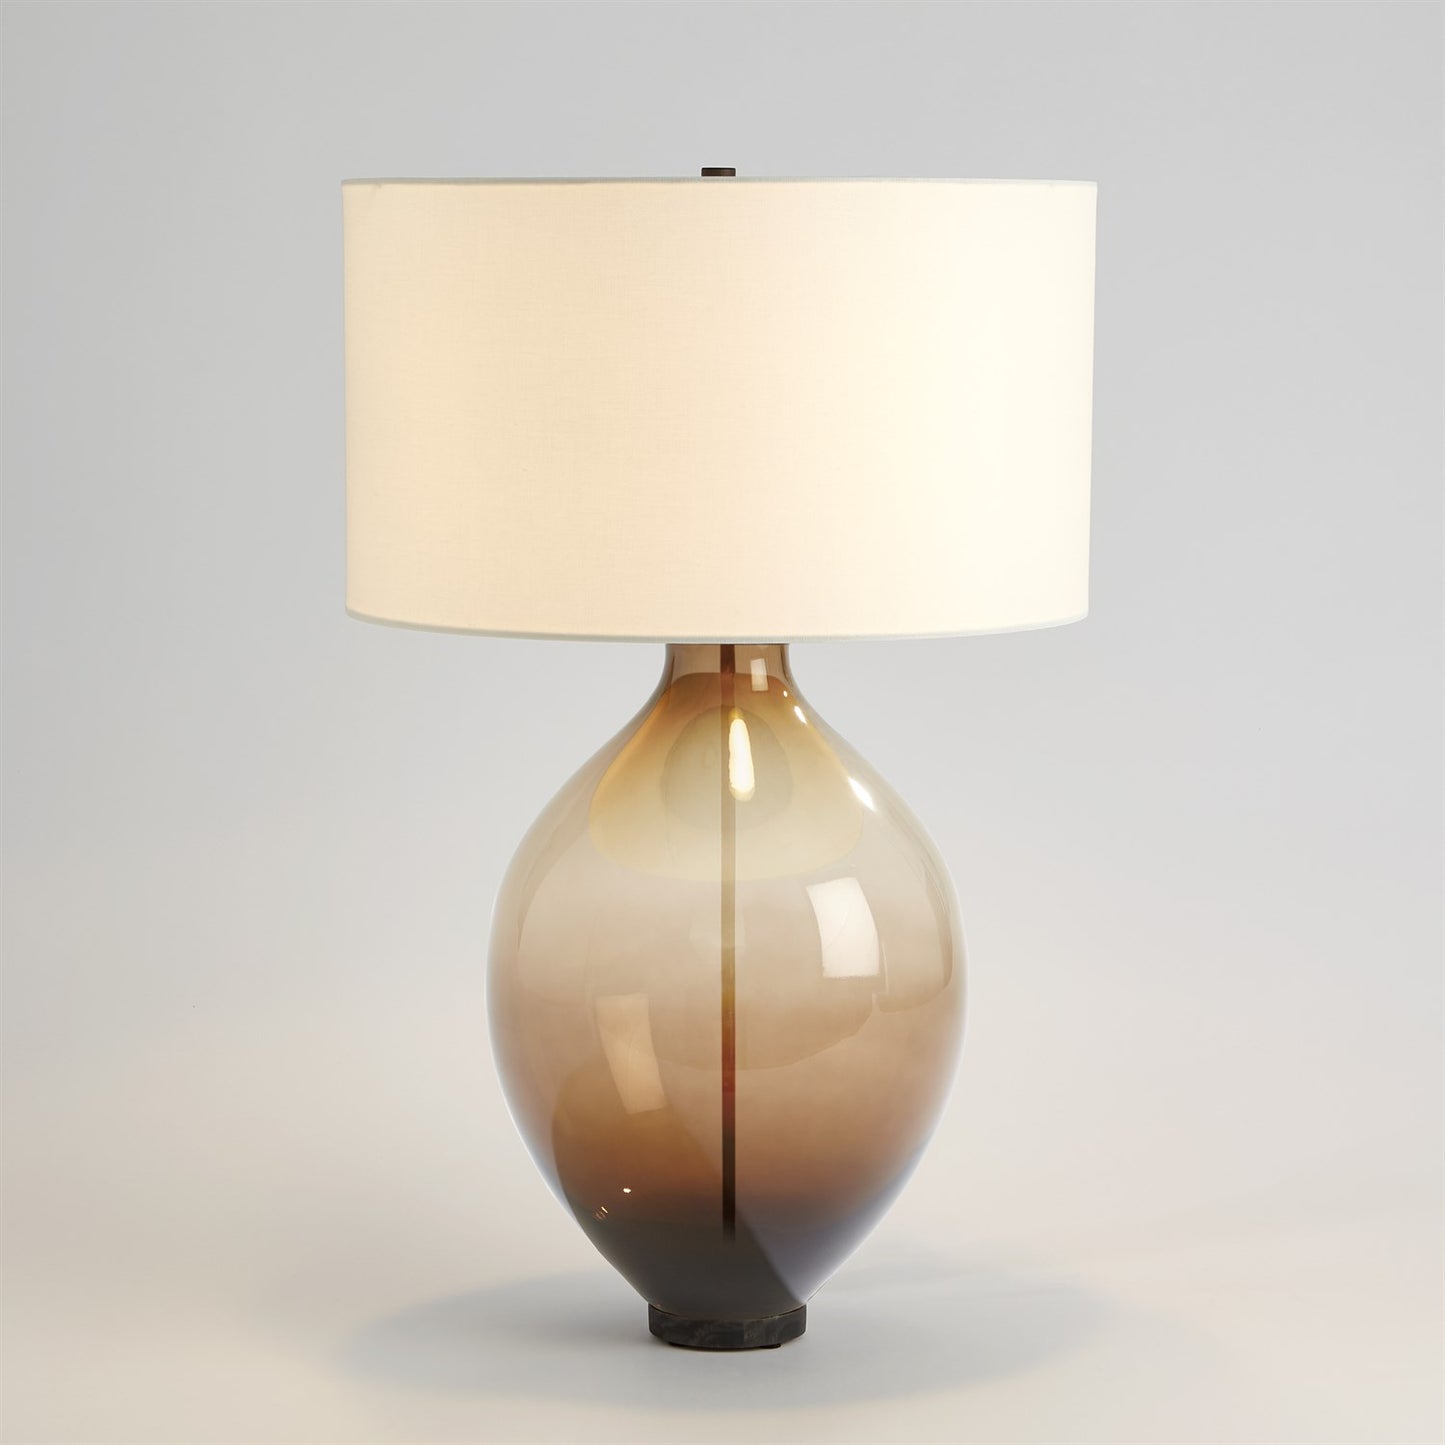 Amphora Glass Table Lamp - Topaz